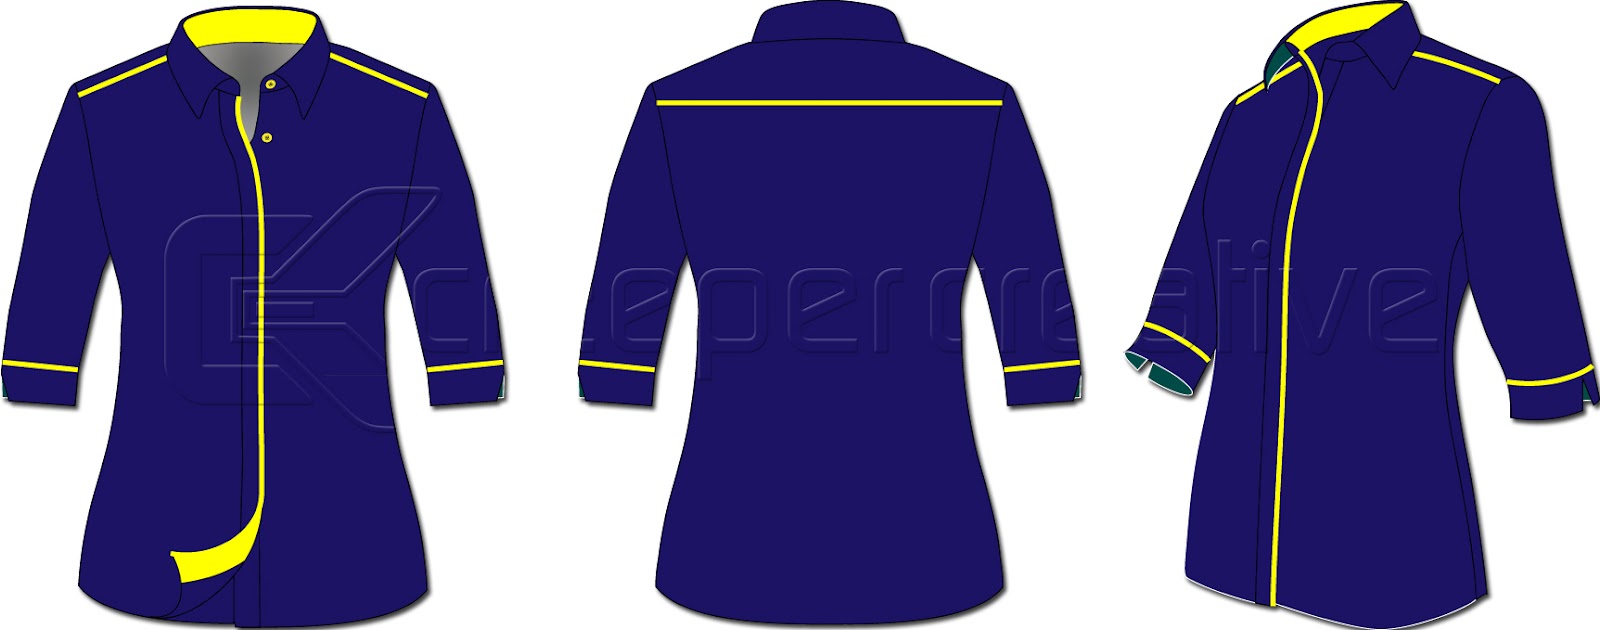 Corporate Shirt CS 02 Series Creeper Design